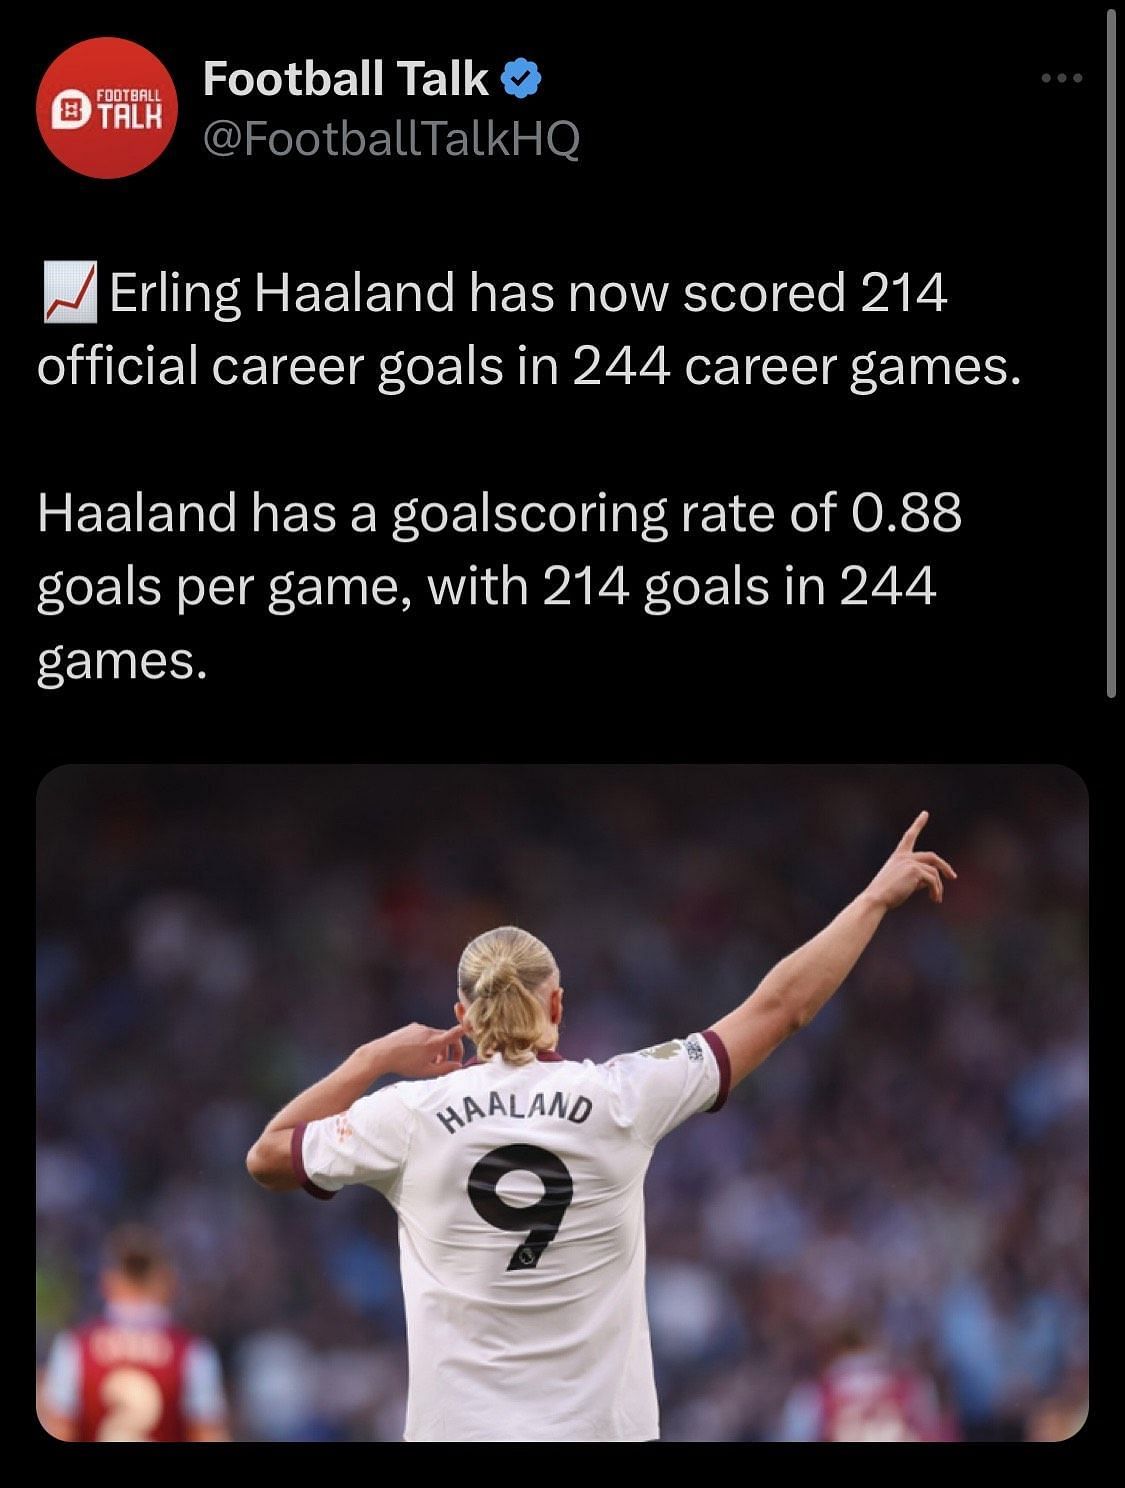 Stunning statistic regarding Erling Haaland&#039;s goalscoring.